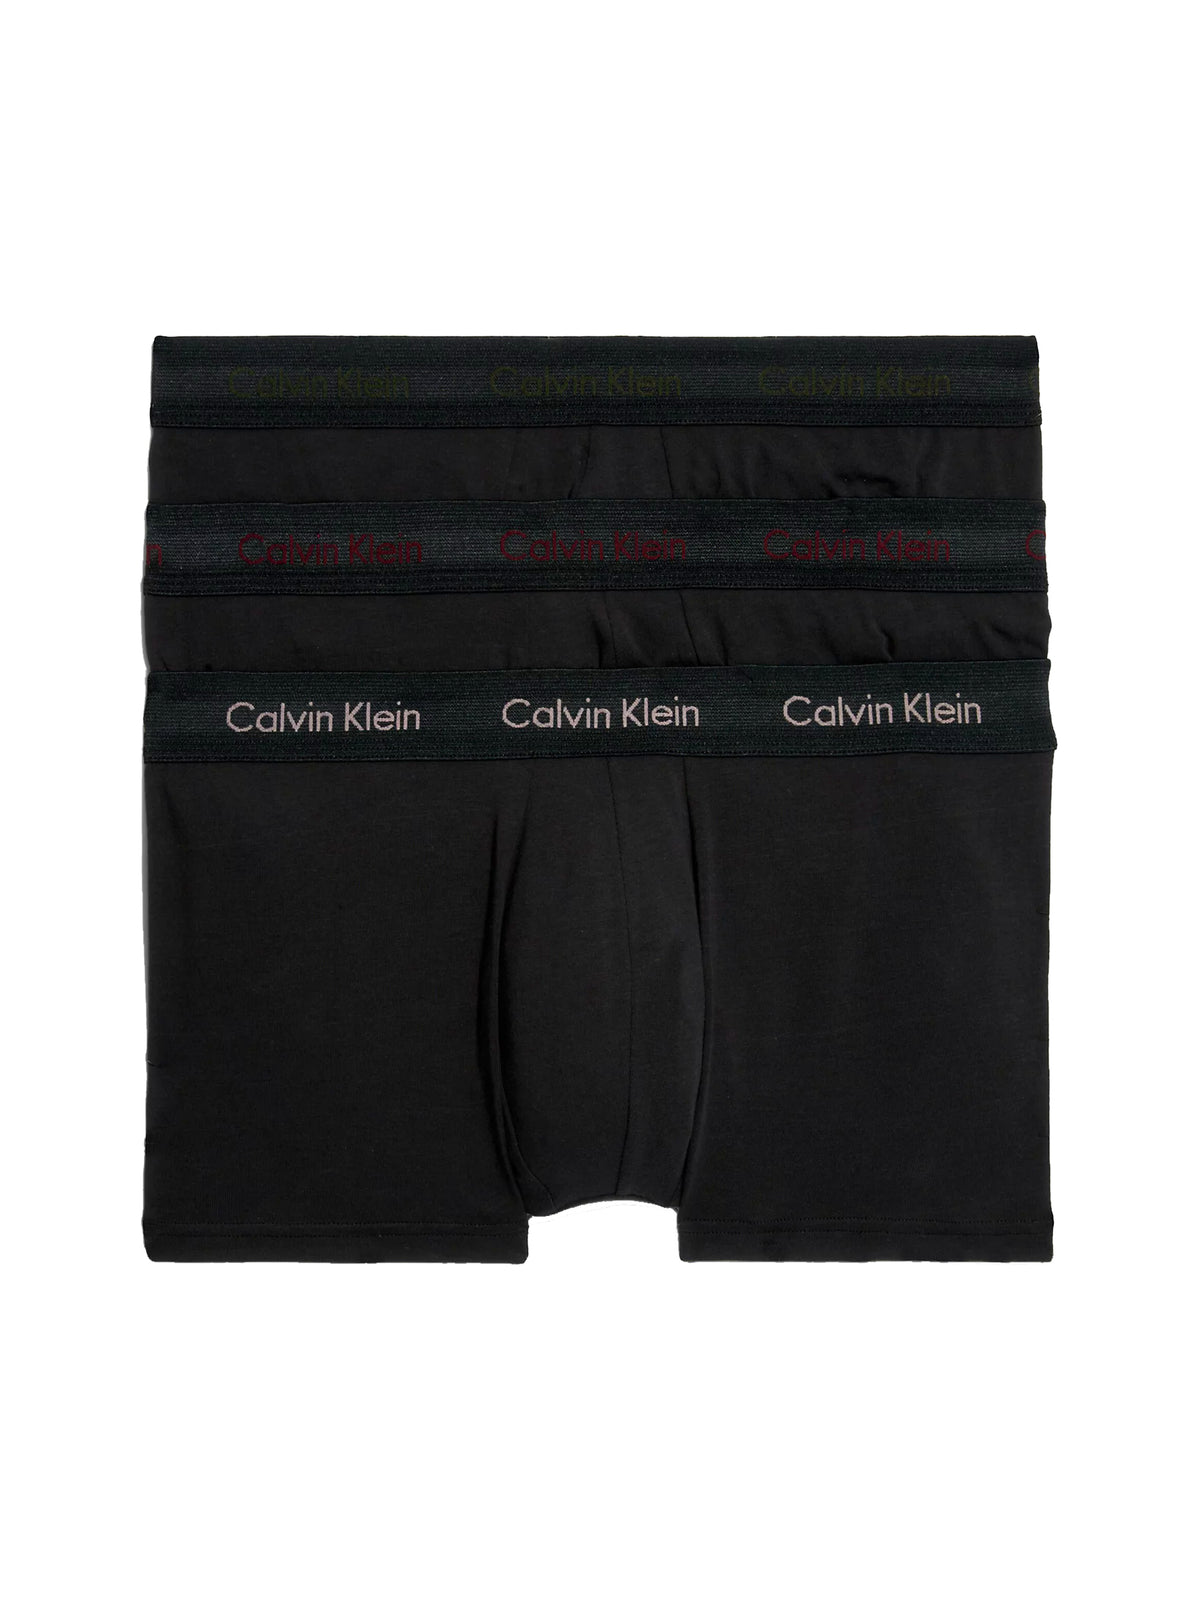 Mens Calvin Klein Boxer Shorts Low Rise Trunks 3 Pack, 01, U2664G, B-Woodrose, Fld Olv, Deep Rouge Lg